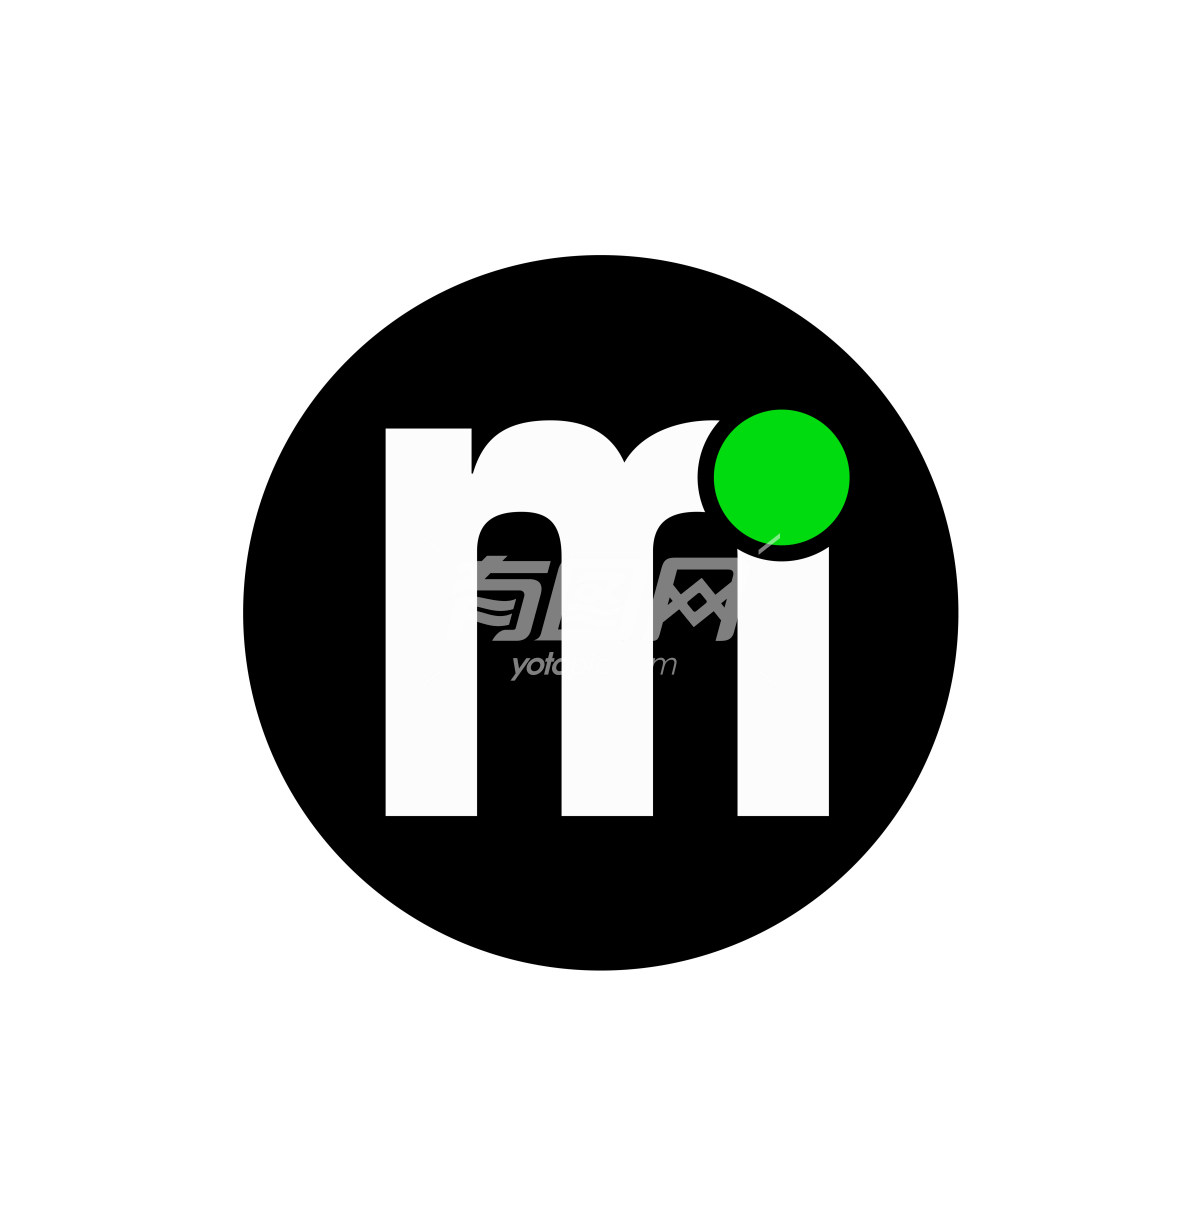 米家logo